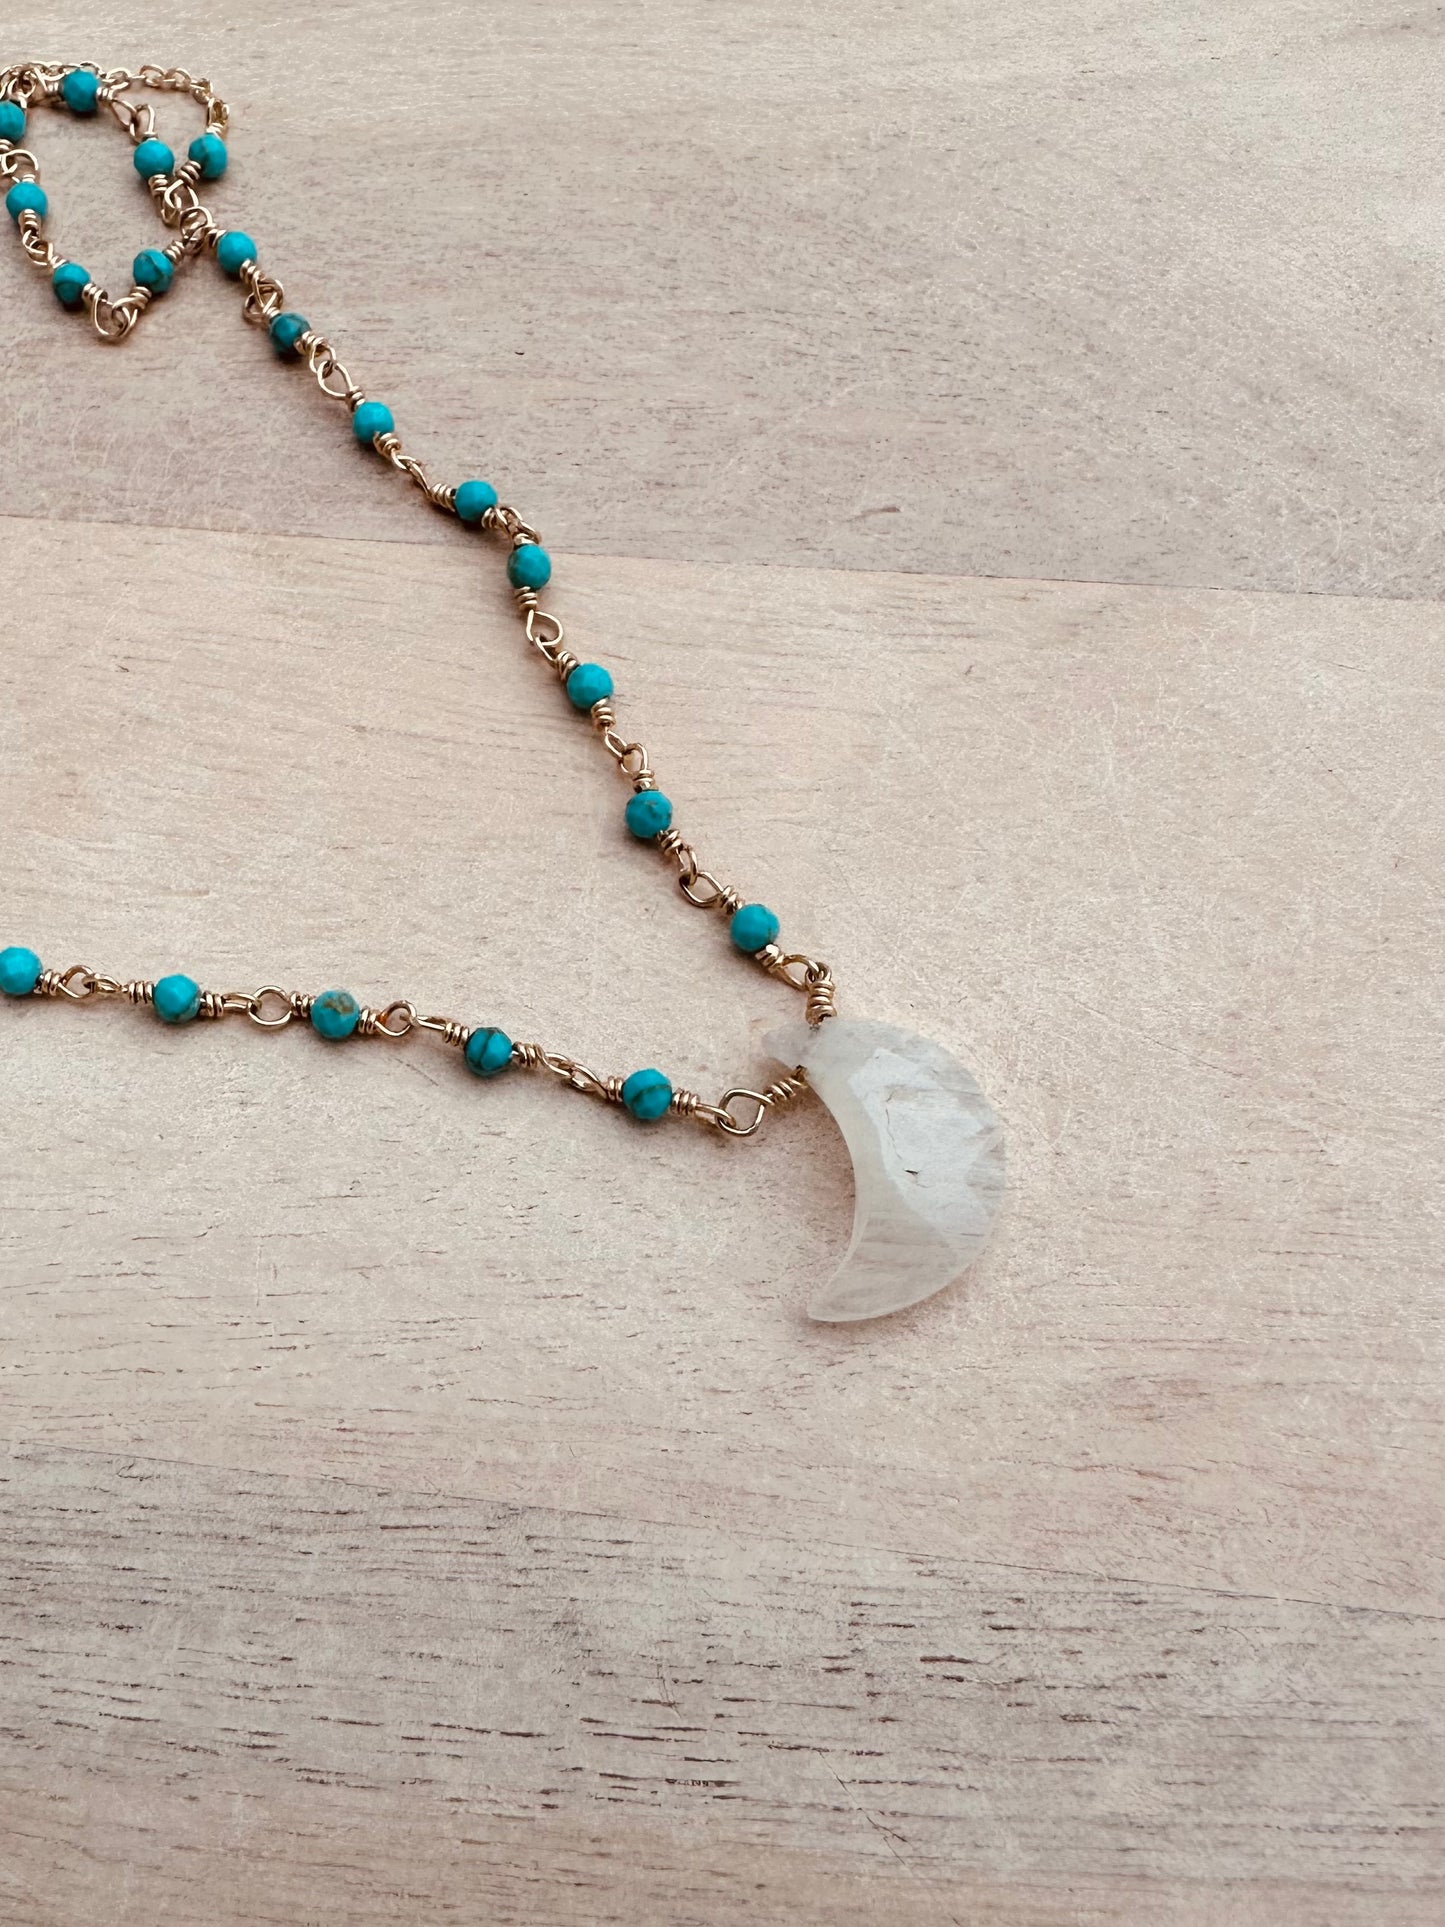 Turquoise & Moonstone Adjustable Necklace